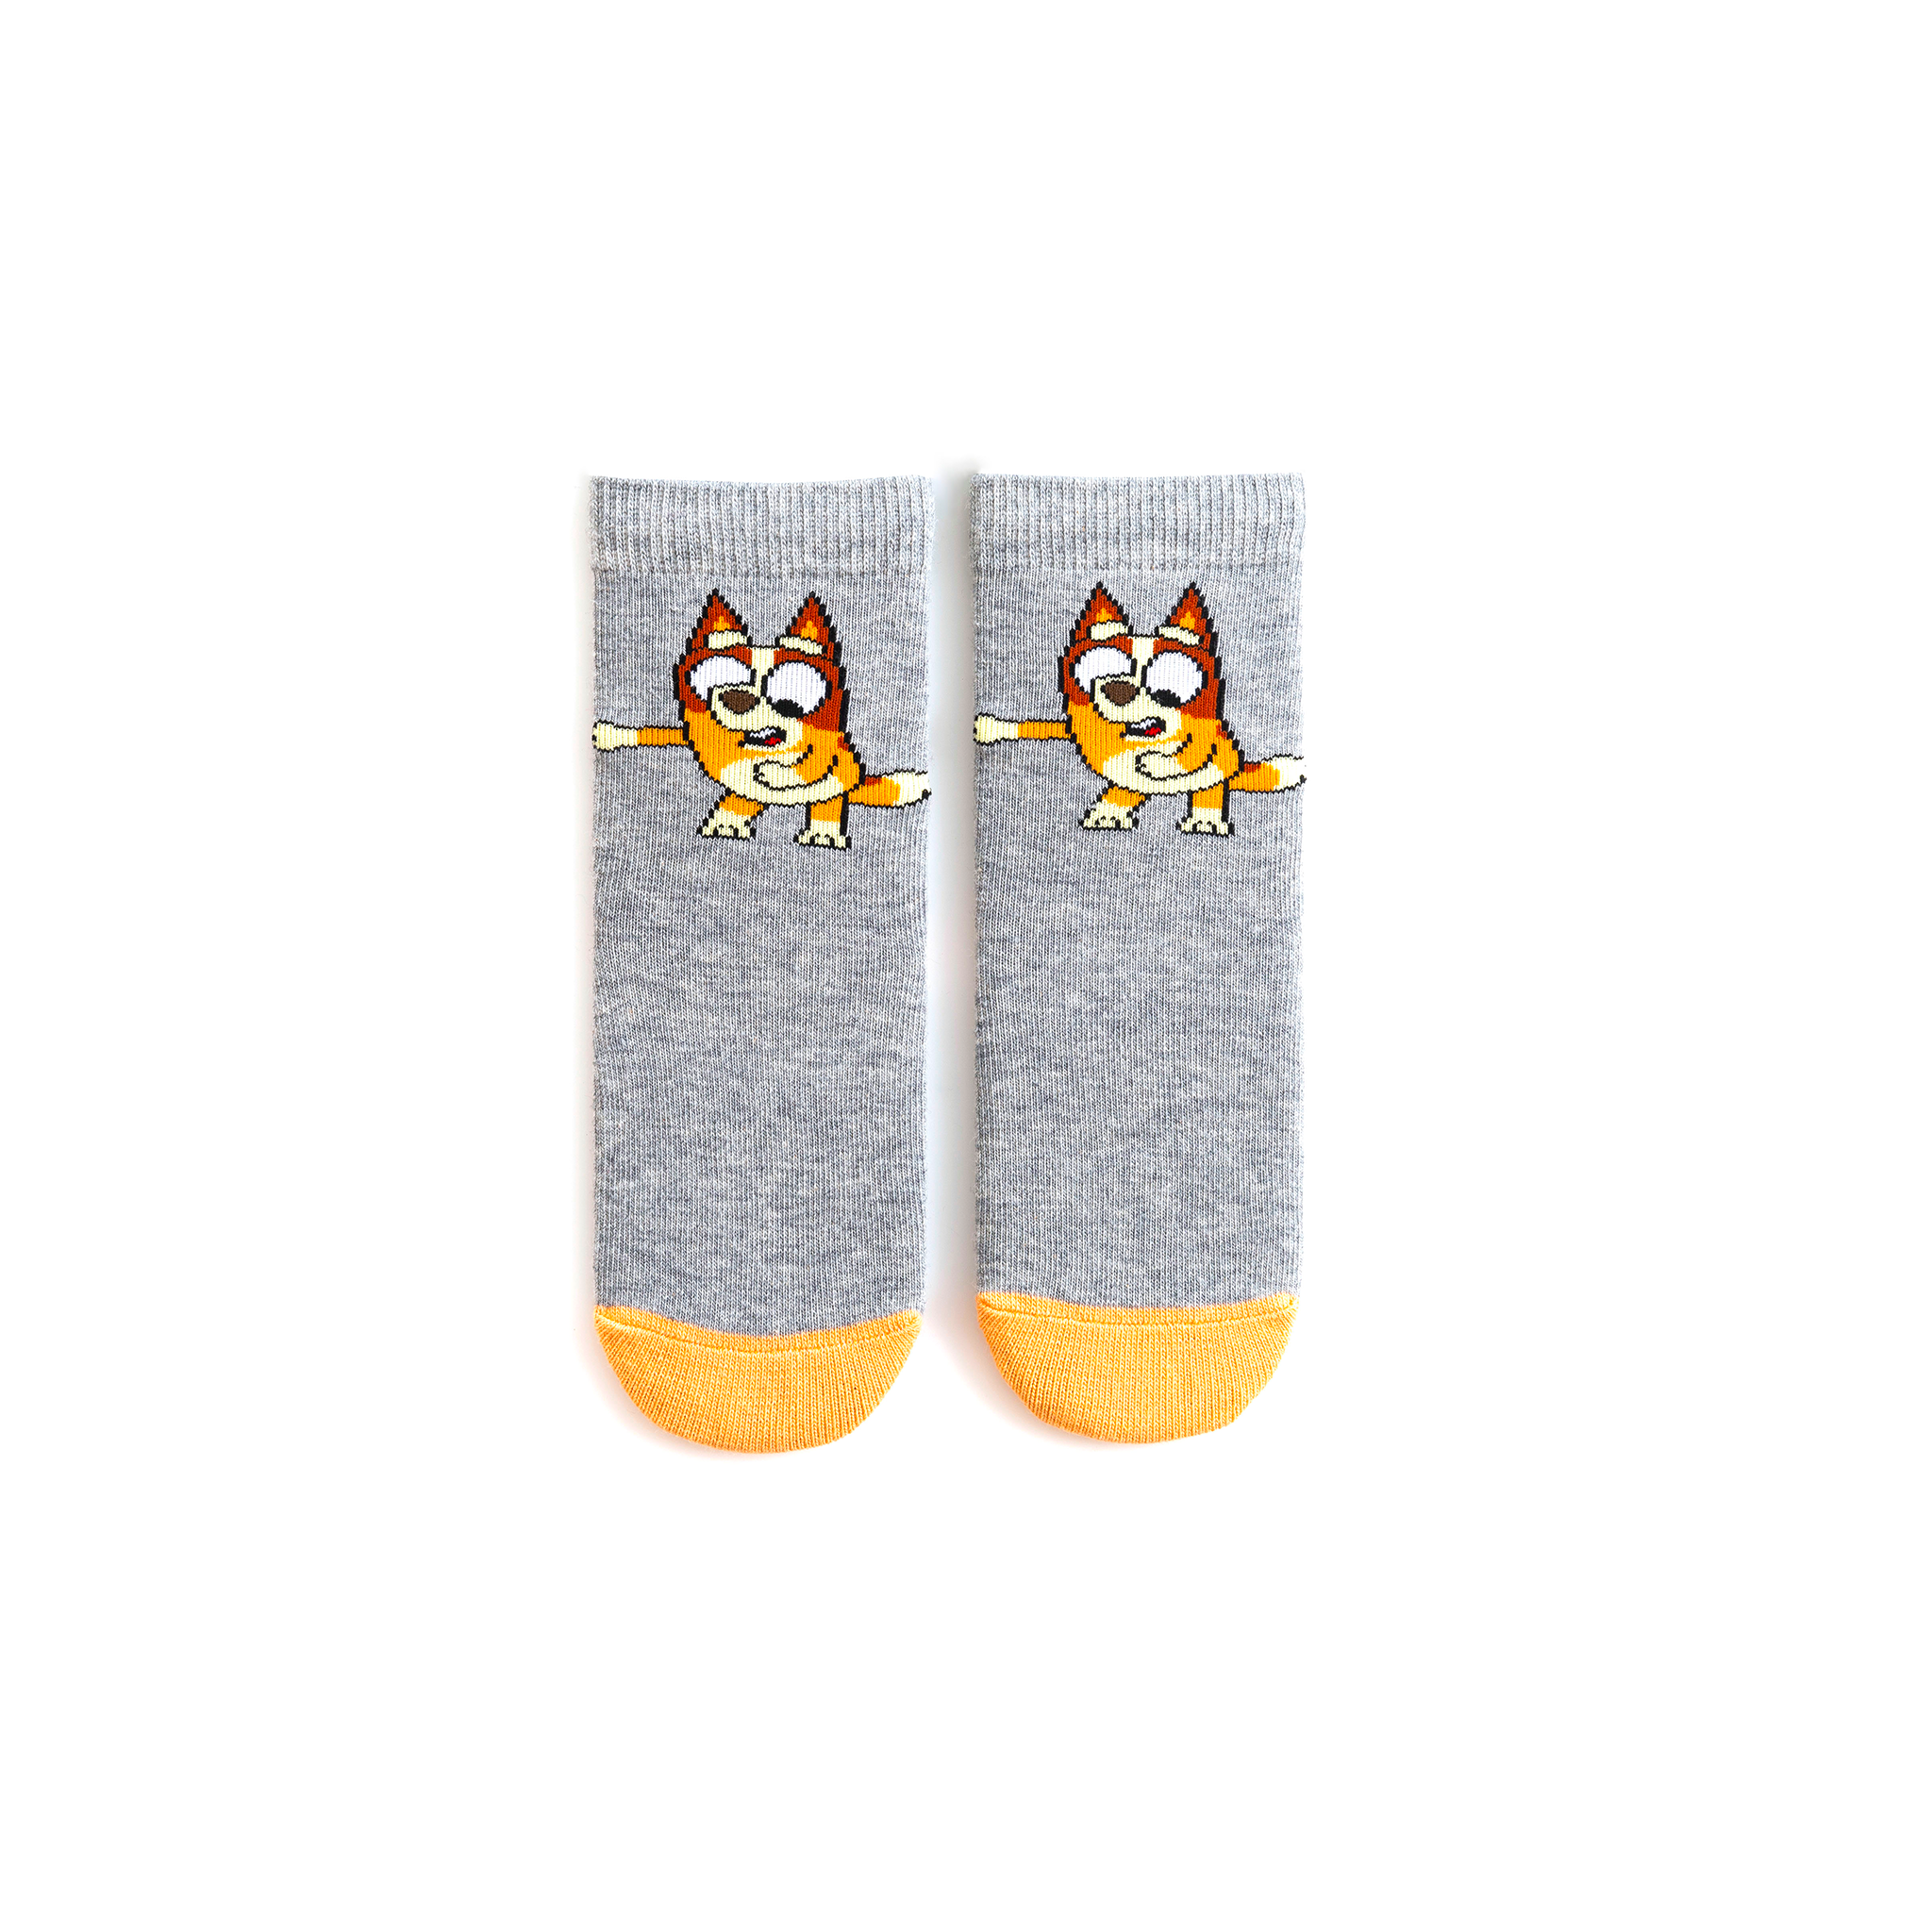 Bluey Socks 3 Pack Kids  Official Character.com Merchandise